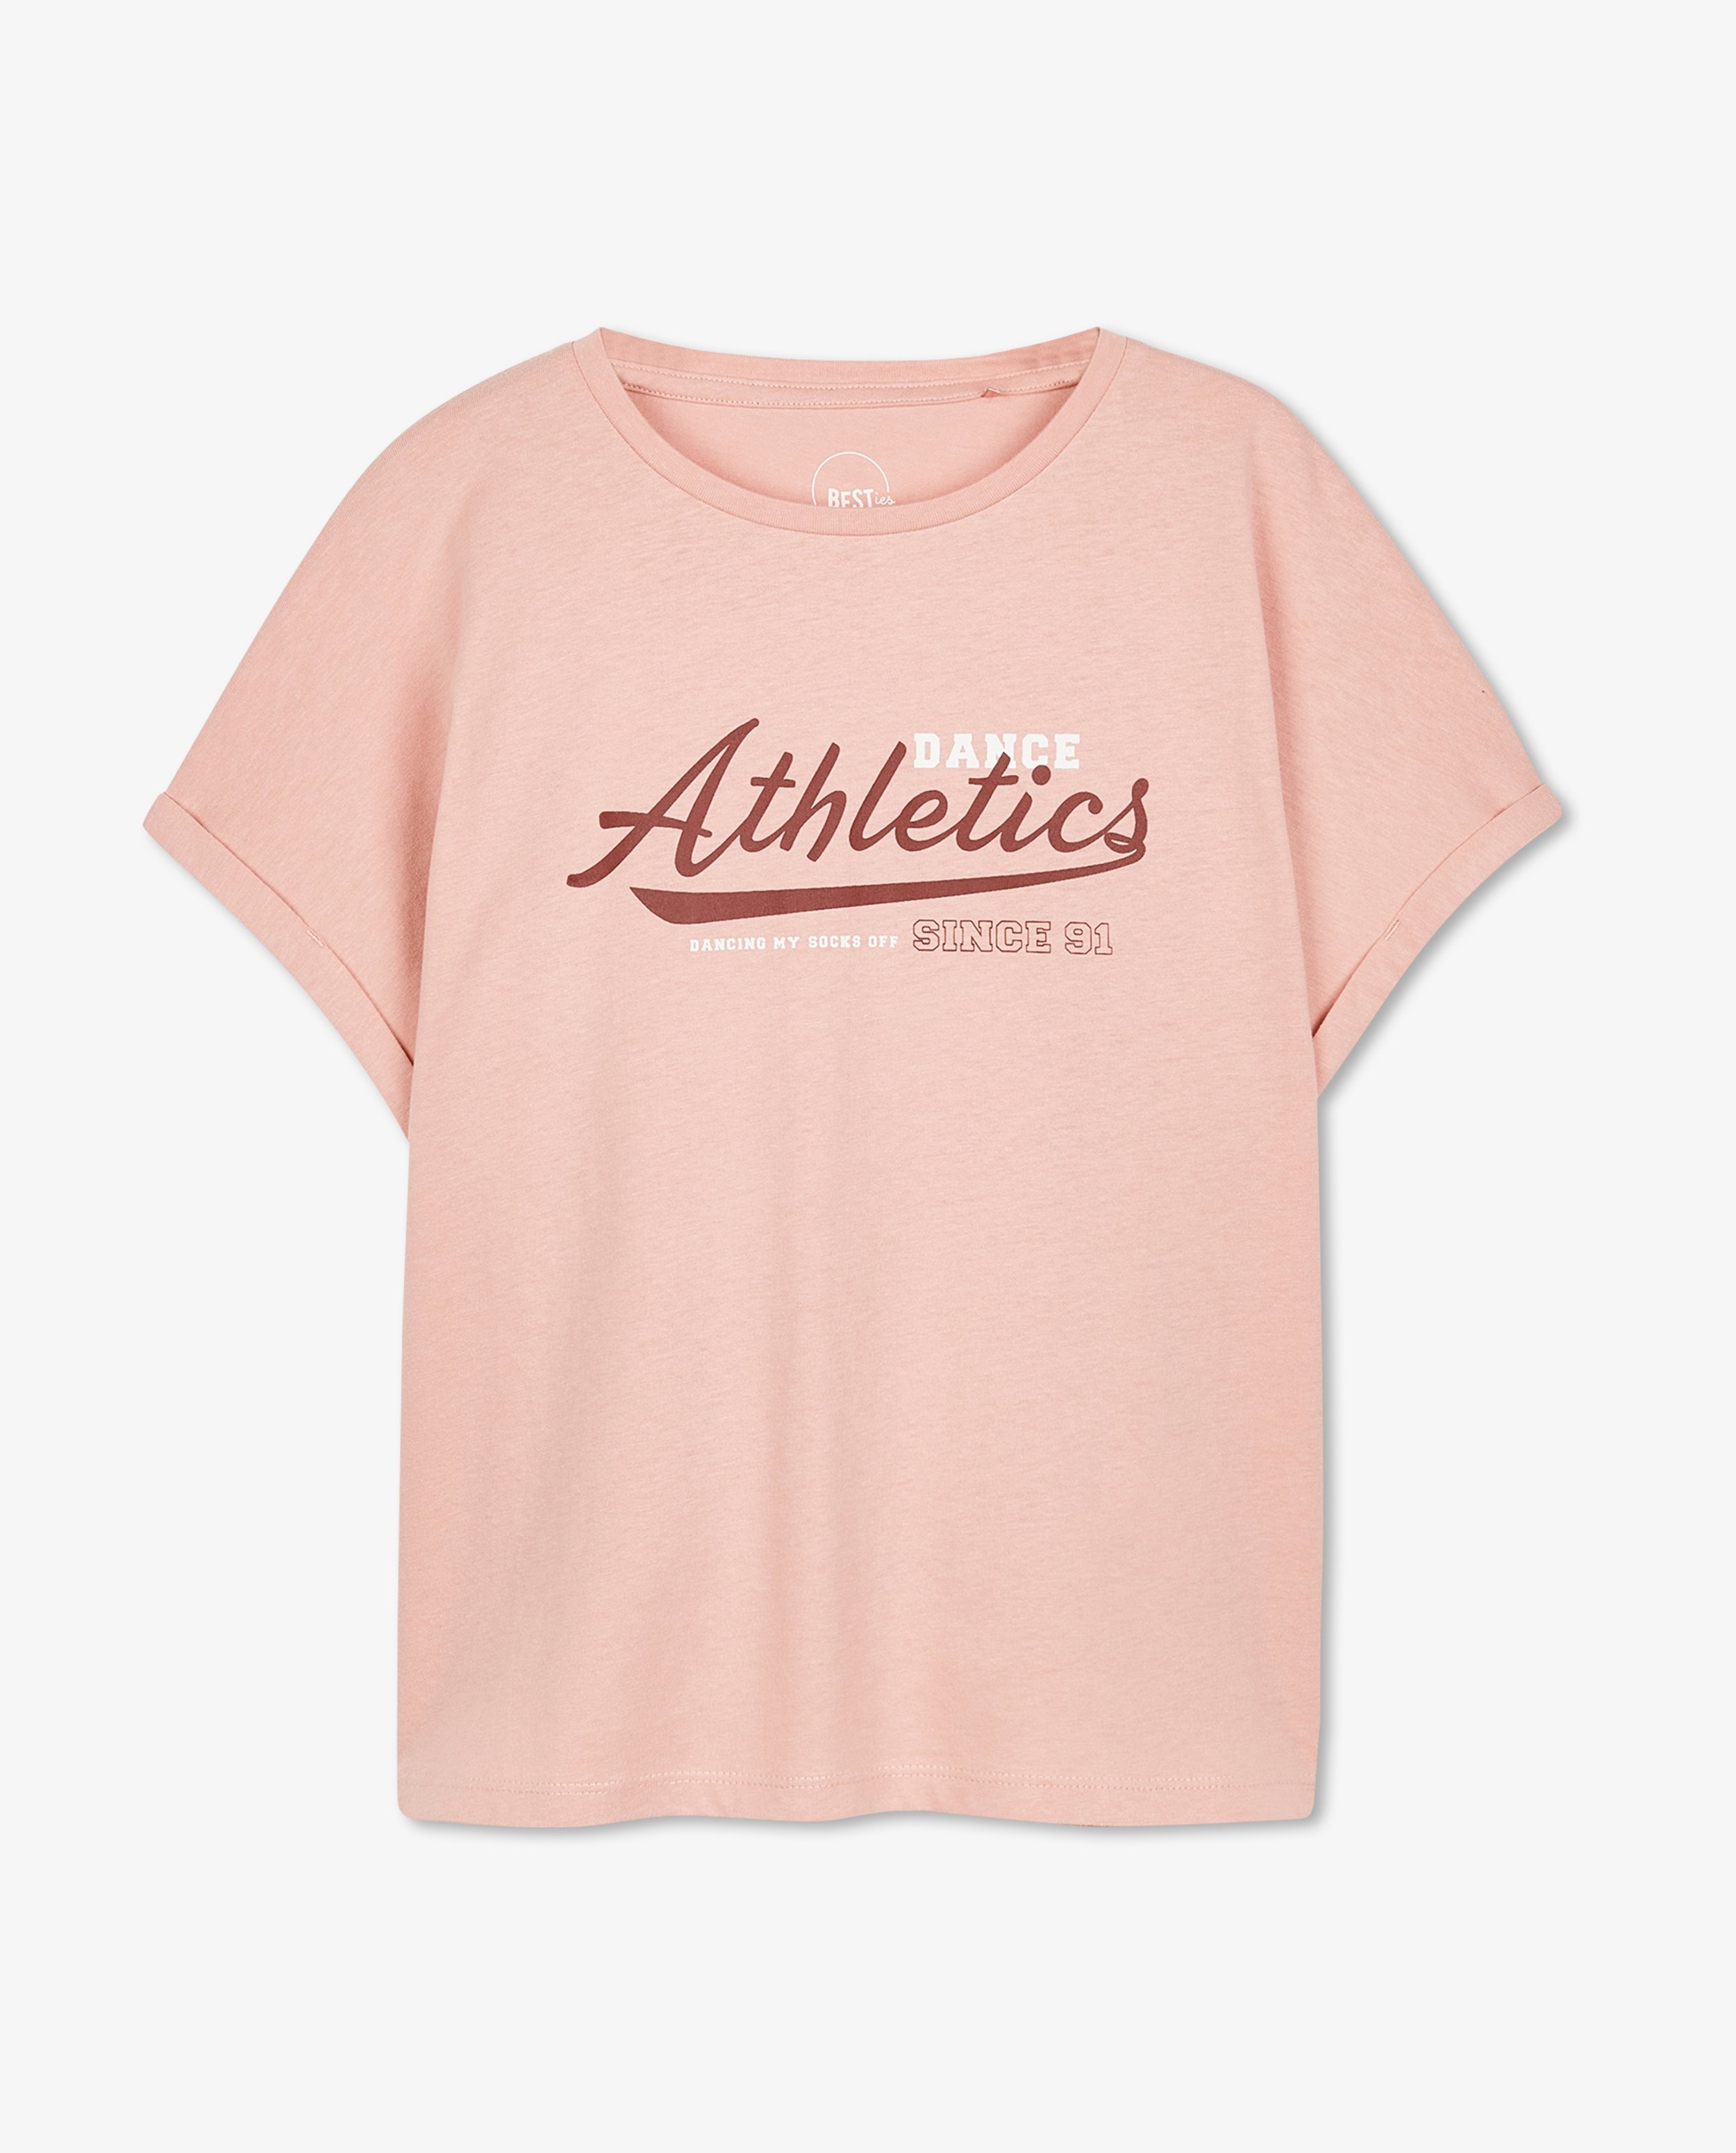 T-shirts - T-shirt rose à inscription